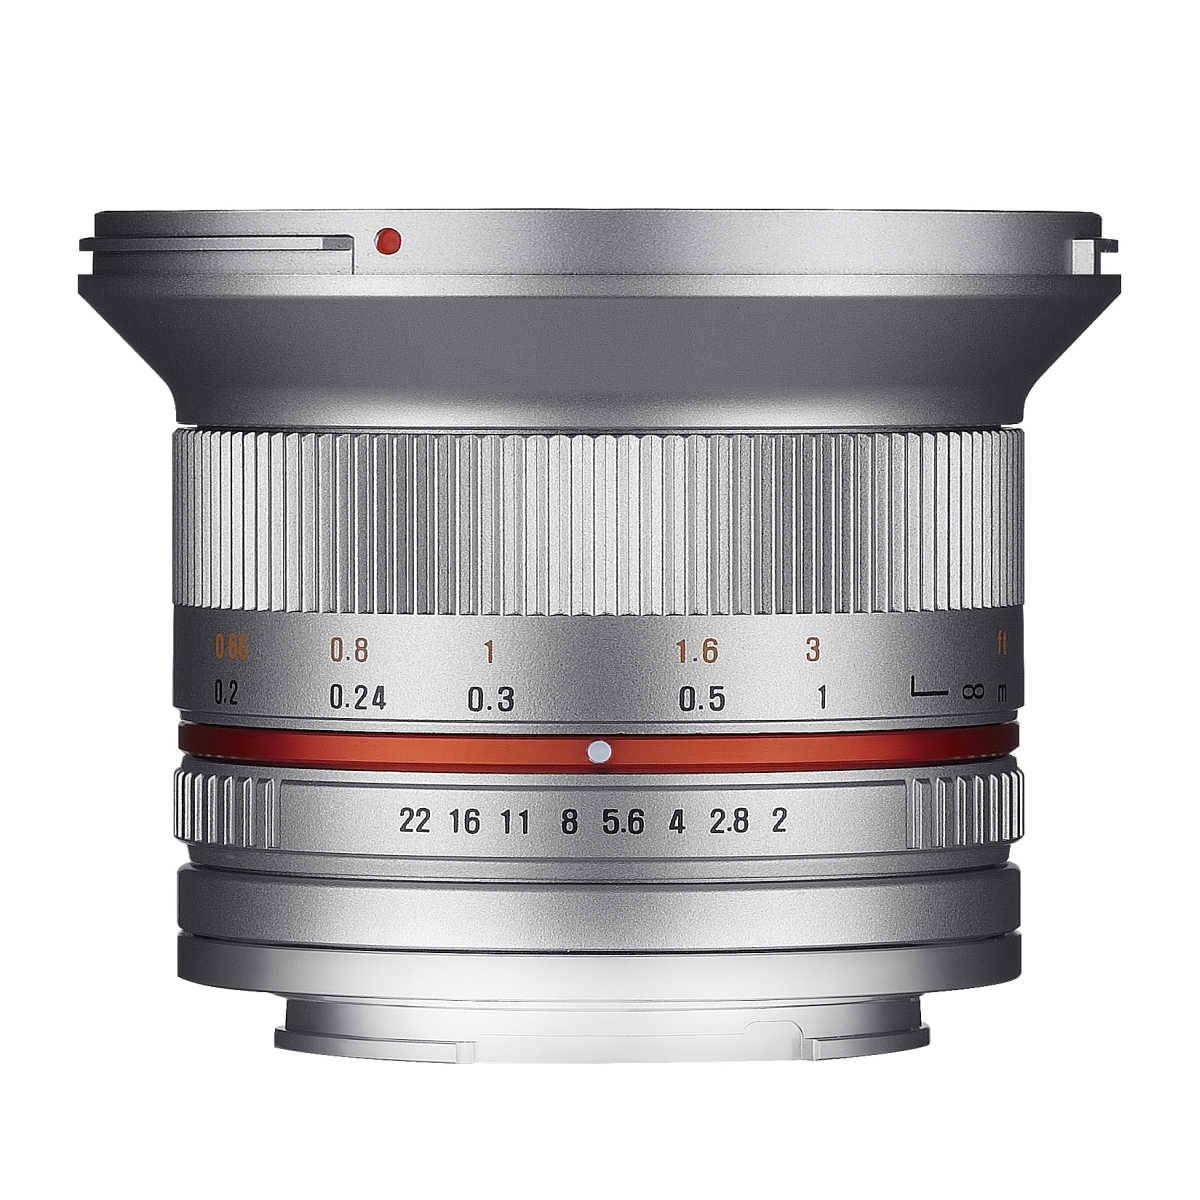 Samyang 12mm f2.0 広角レンズレンズ(単焦点) - レンズ(単焦点)